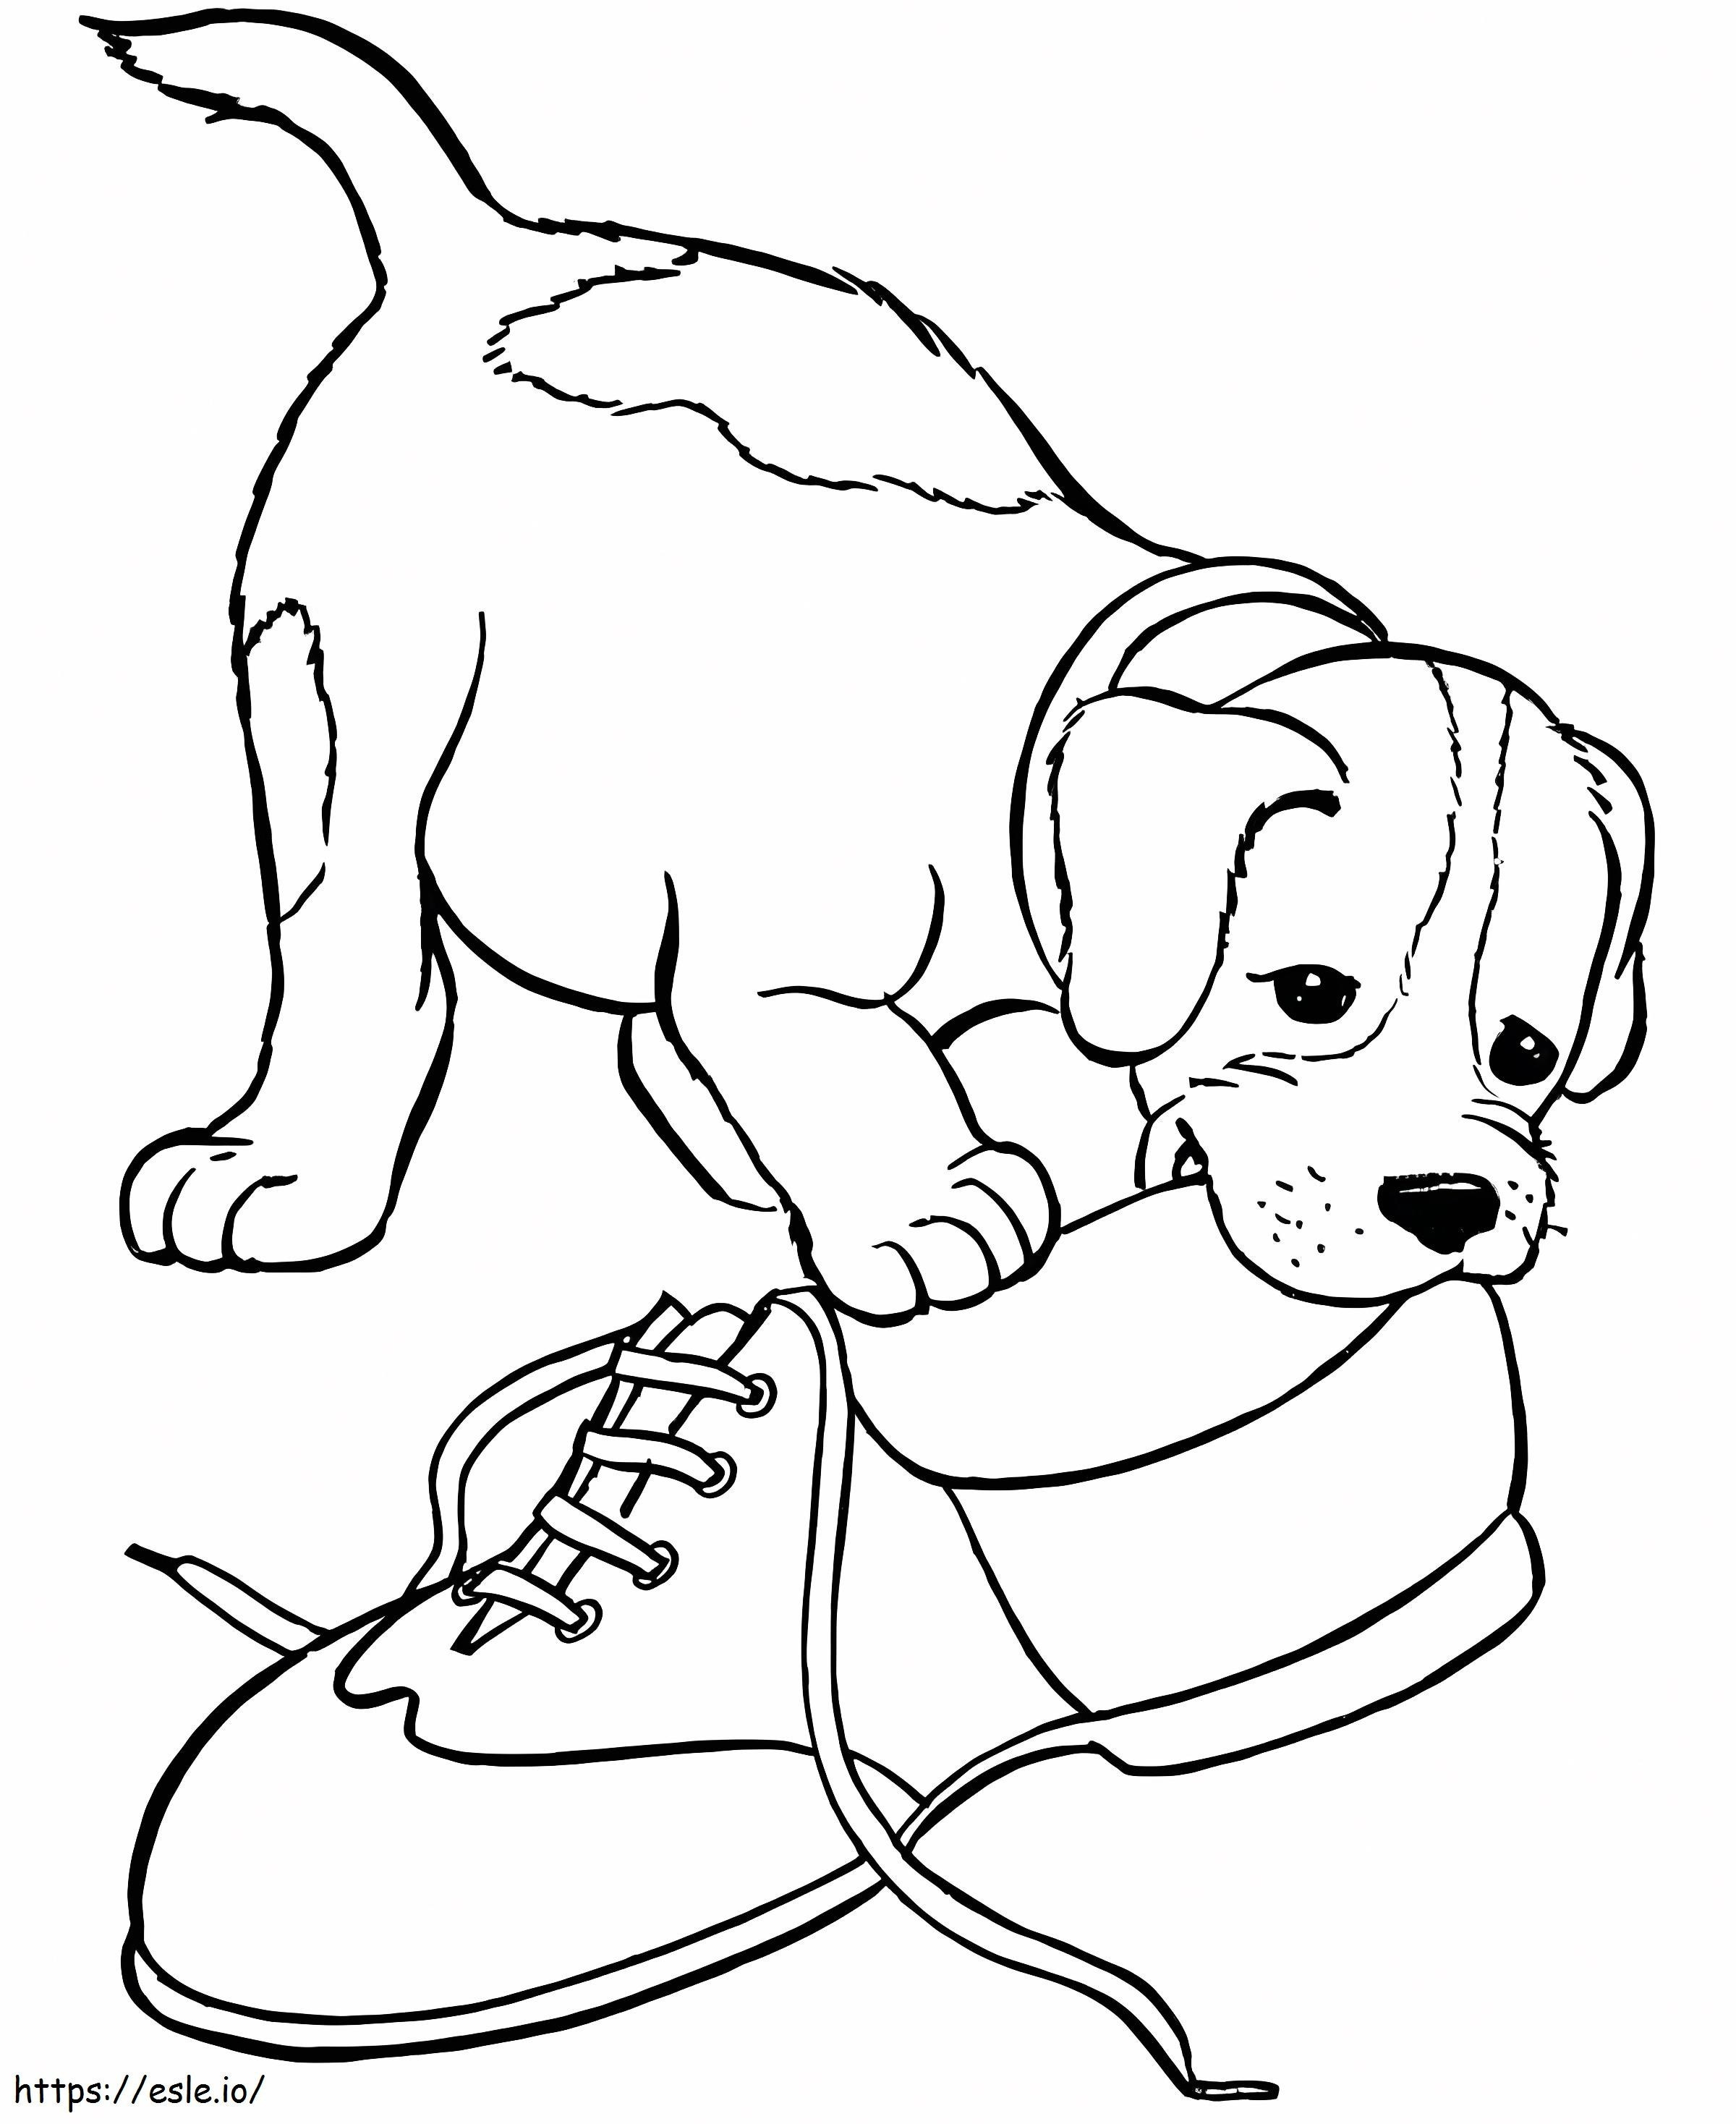 Beagle do żucia buta kolorowanka